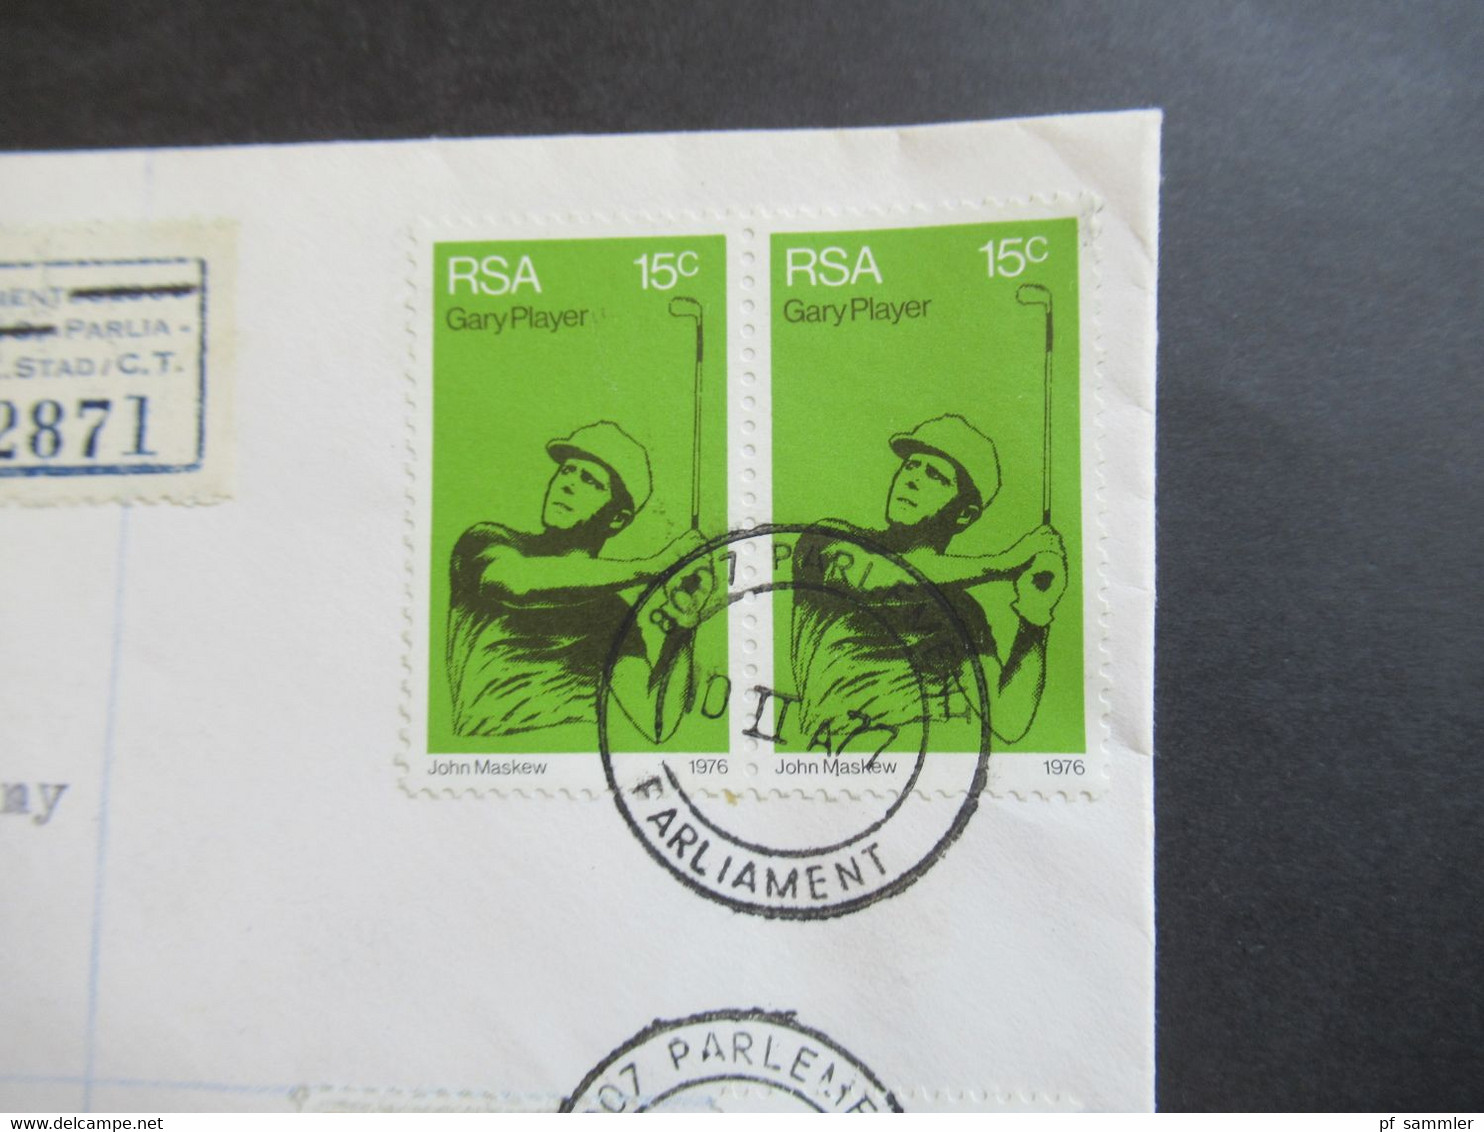 RSA / Süd - Afrika 1977 Air Mail Nach Israel R-Zettel Parlement Parliament K. Stad / Cape Town Volksraad Kaapstad - Briefe U. Dokumente